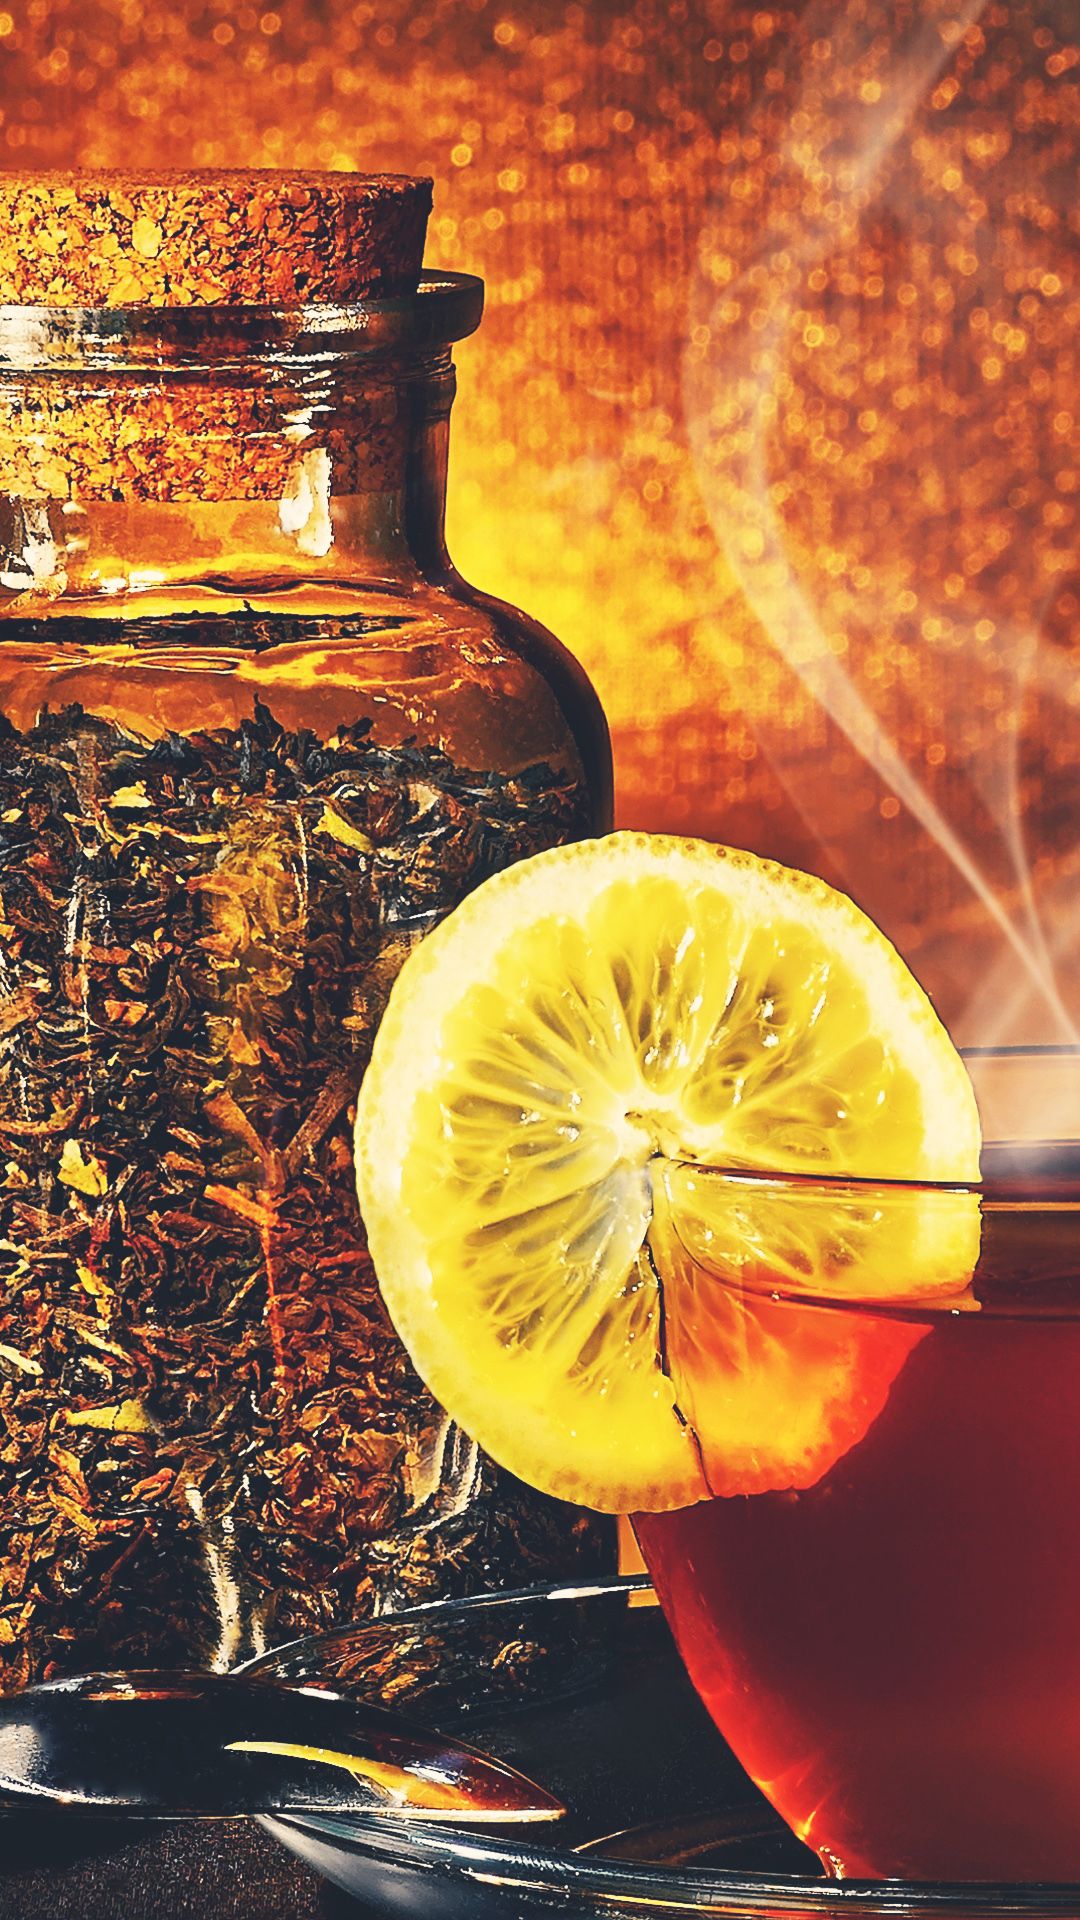 Hot Tea Lemon Android Wallpaper free download